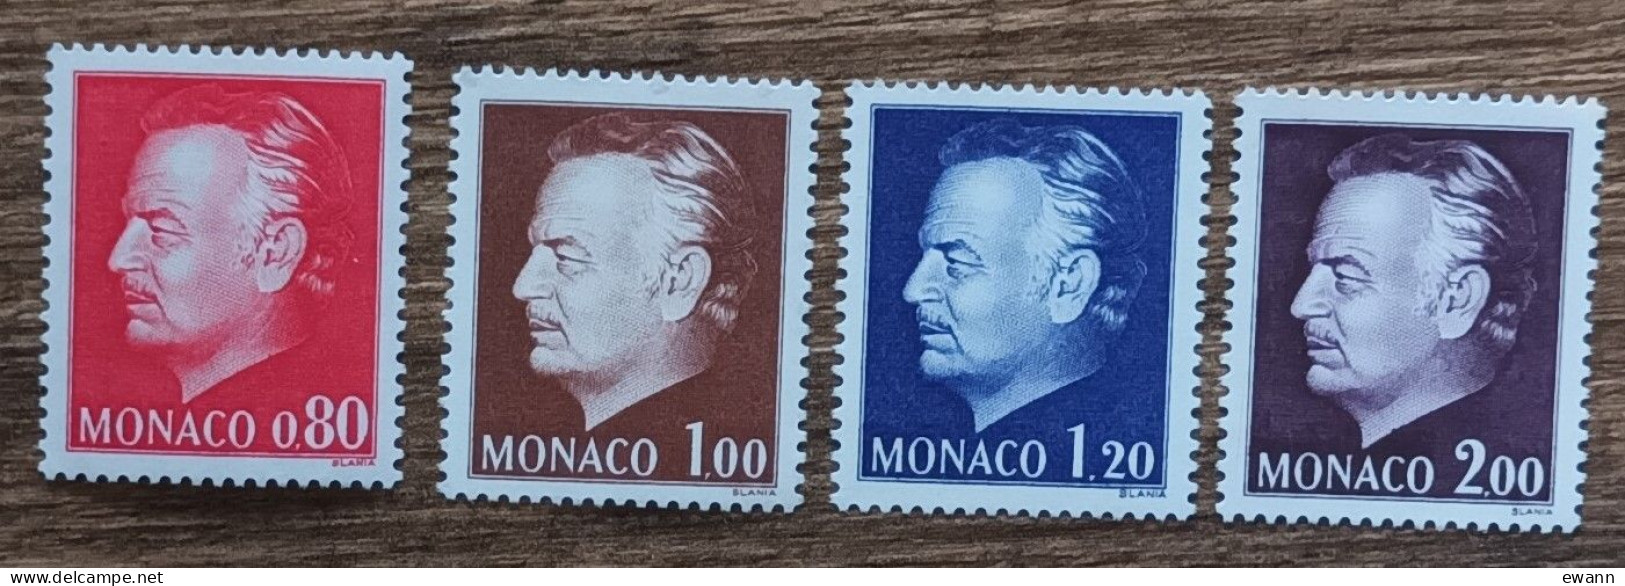 Monaco - YT N°993 à 996 - Nouvelle Effigie Du Prince Rainier III - 1974 - Neuf - Neufs